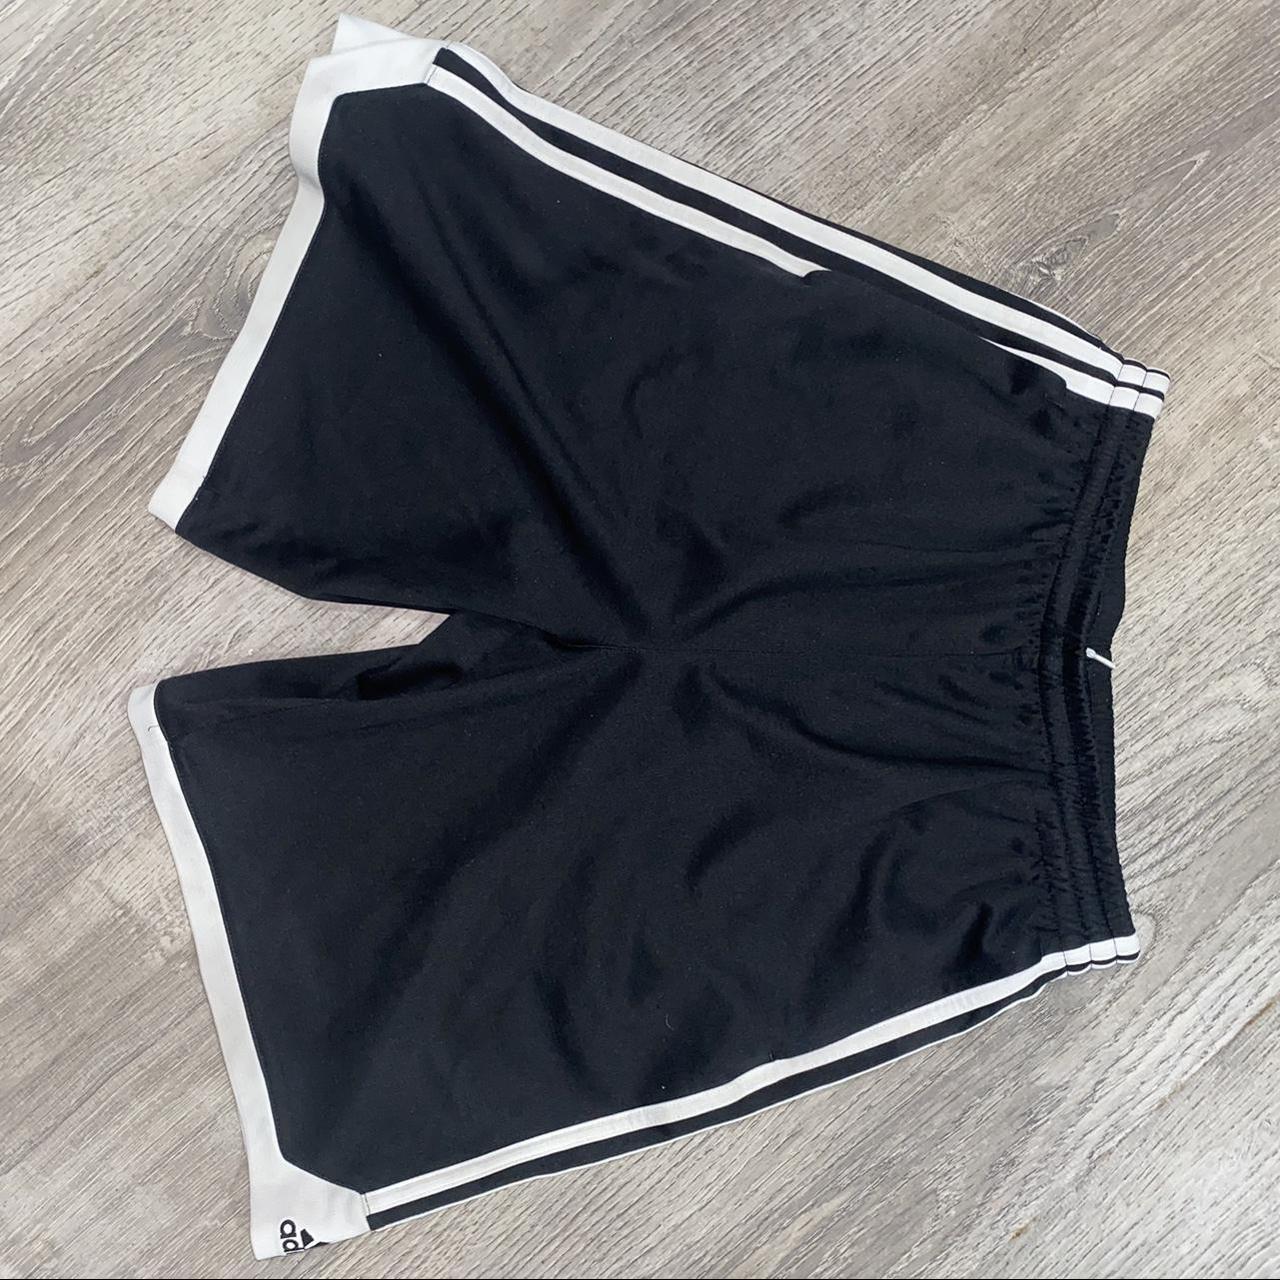 Adidas Black Shorts | Depop